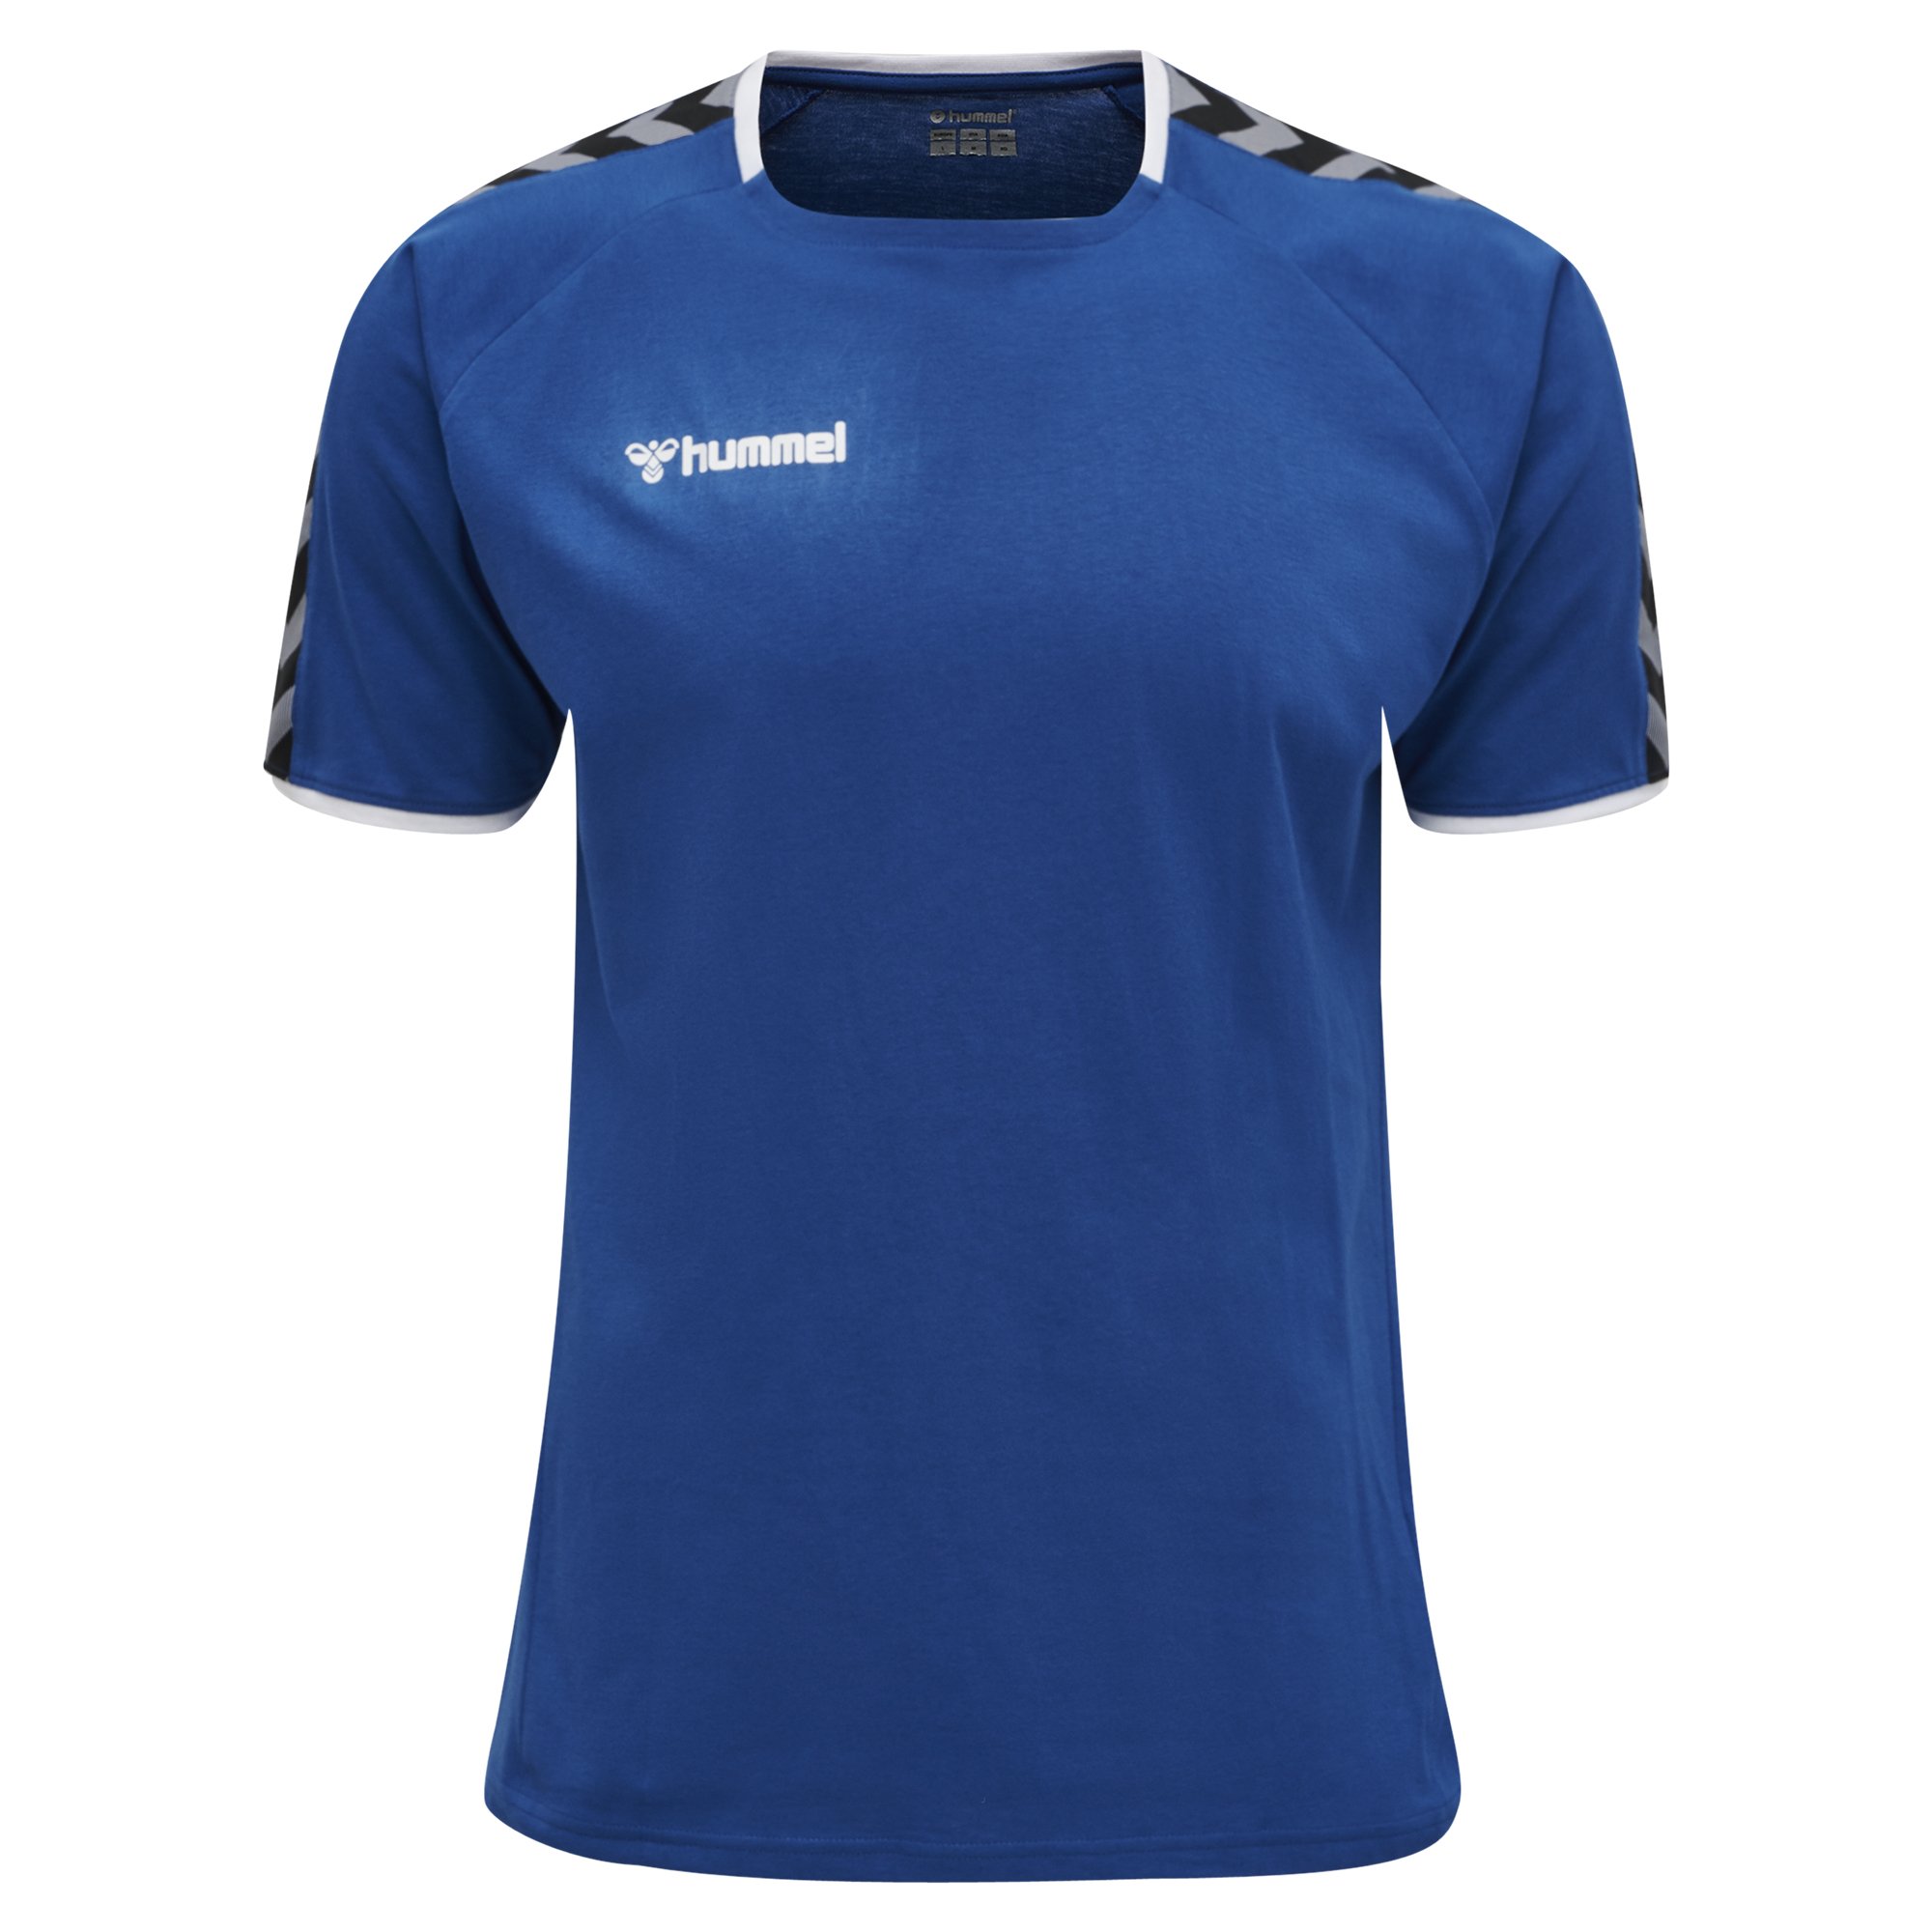 Hummel Authentic Training T-Shirt